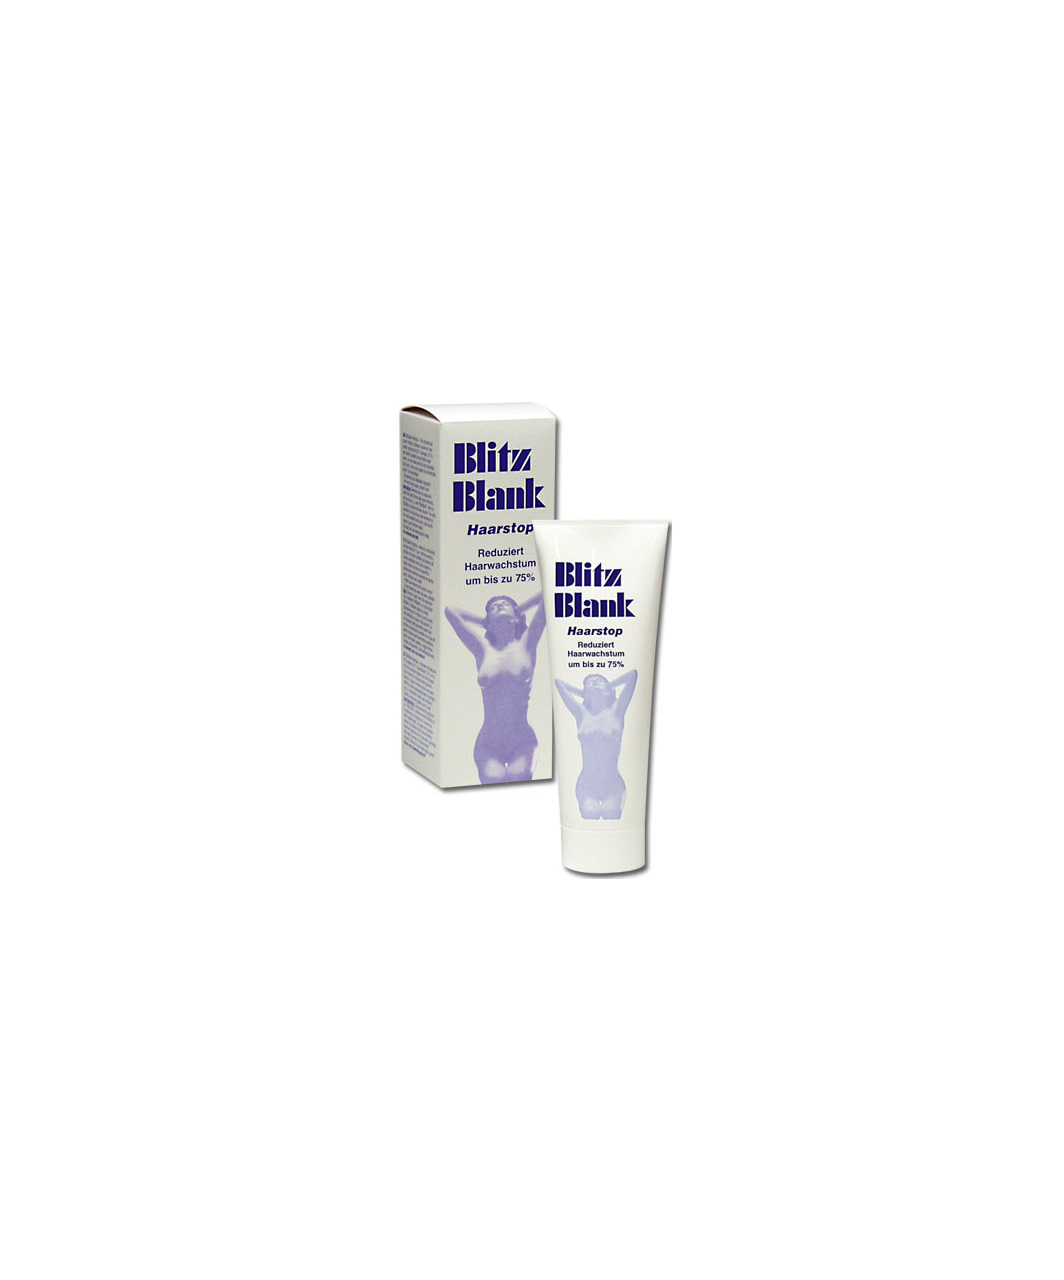 Blitz Blank hairstop cream (80 ml)